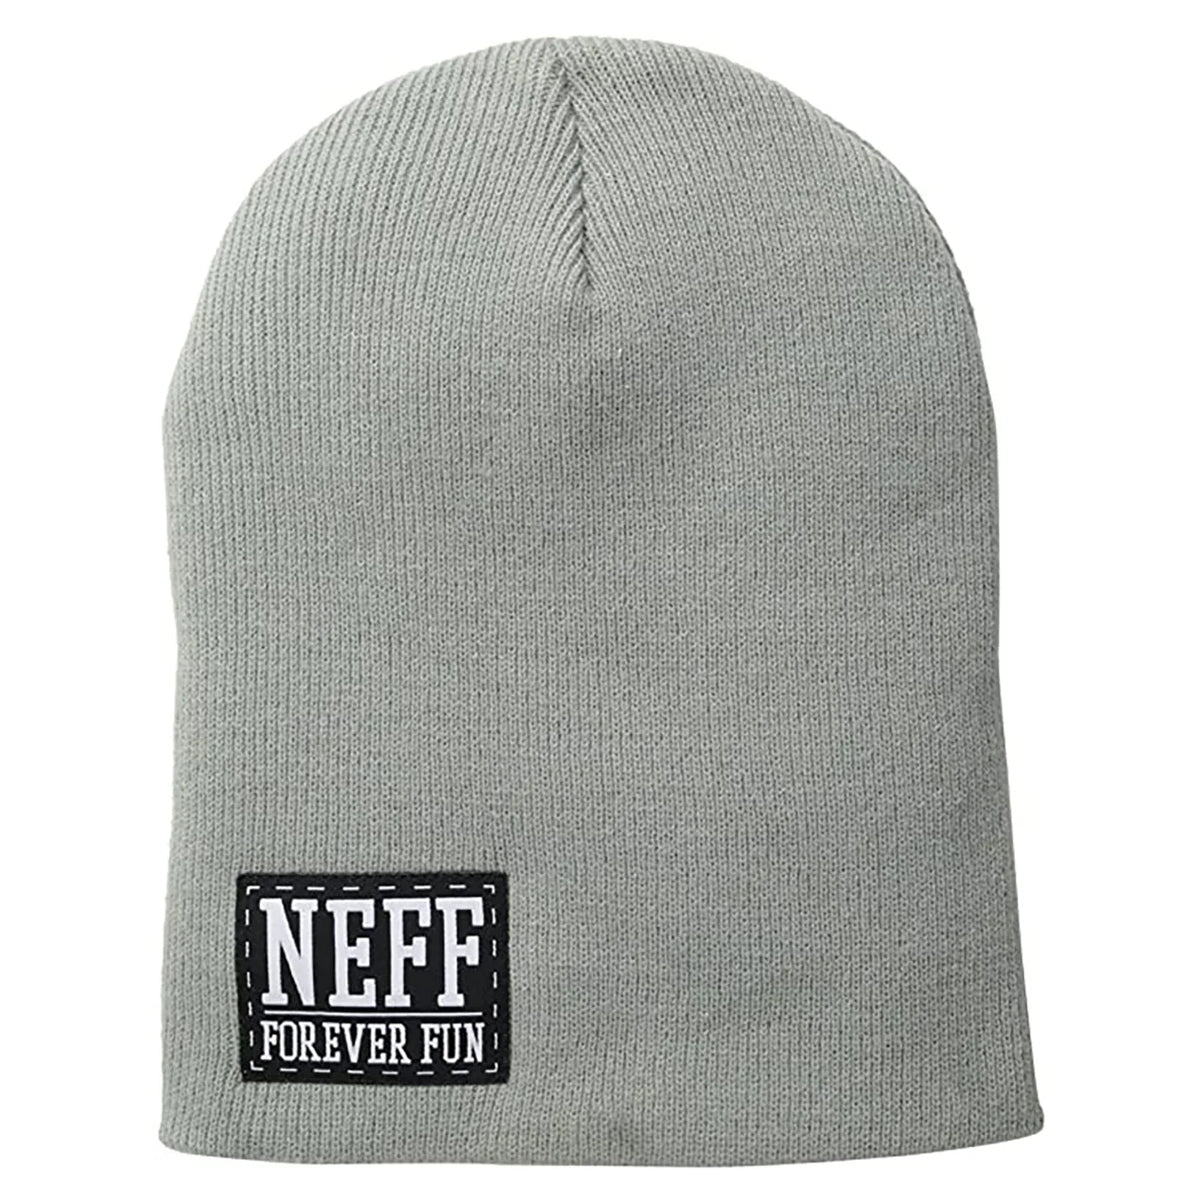 Neff Forever Fun Men's Beanie Hats 